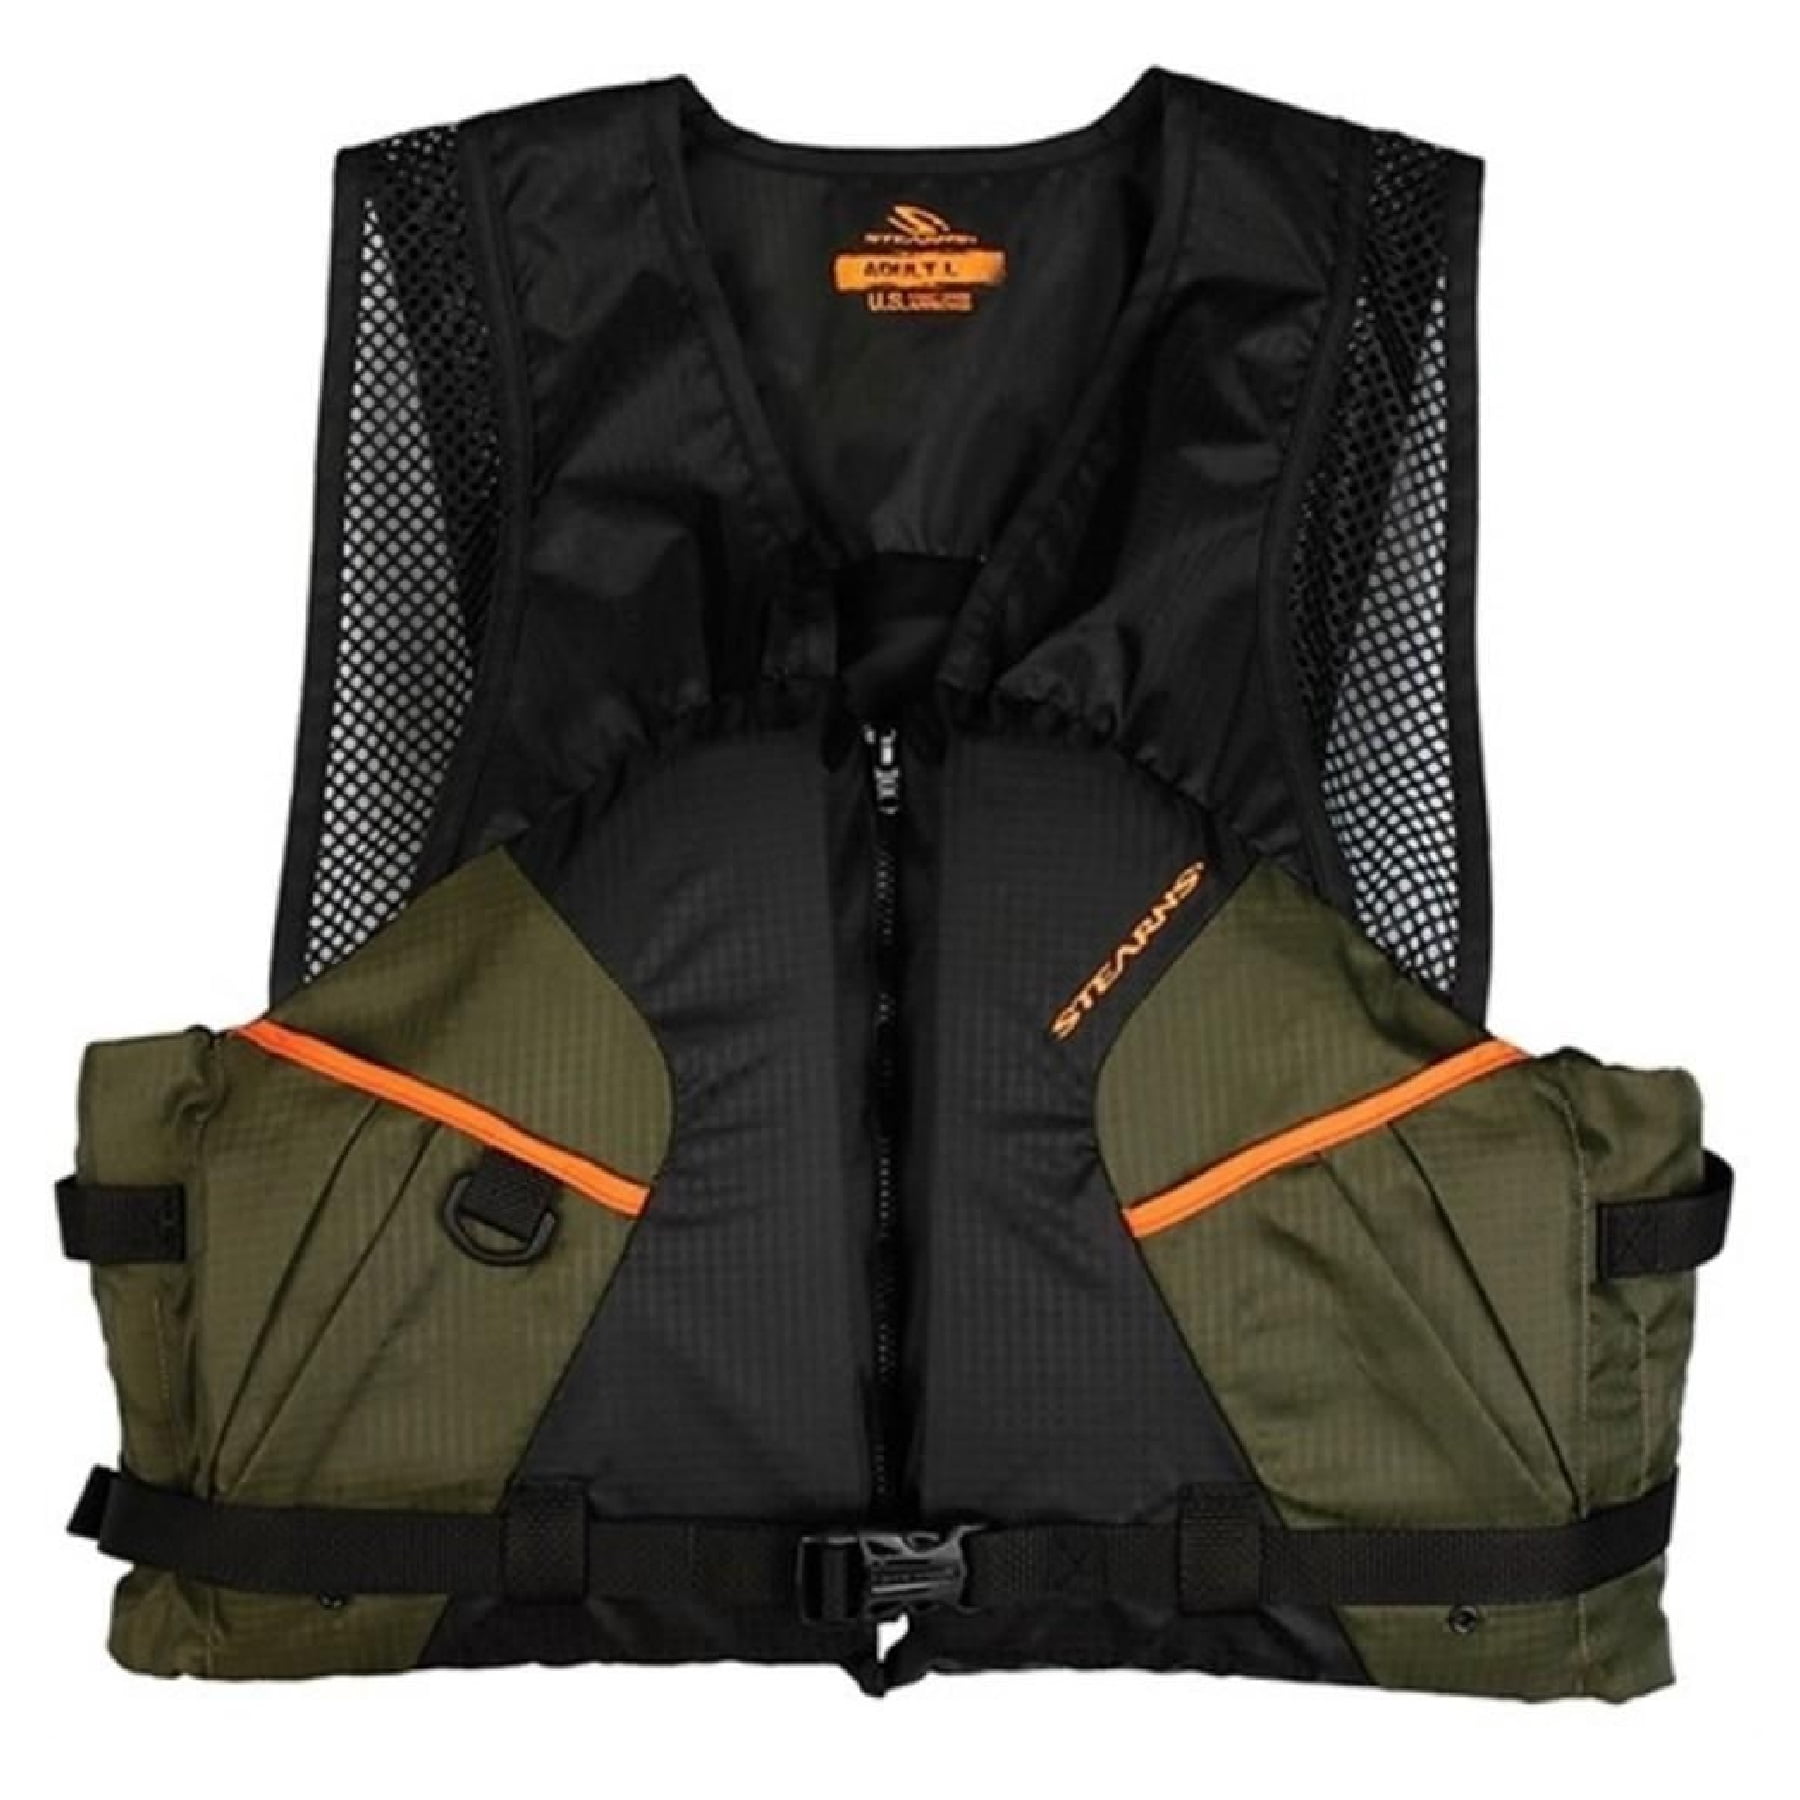 Stearns PFD 6144 Aqueous Extreme Paddlesport Vest X-Large